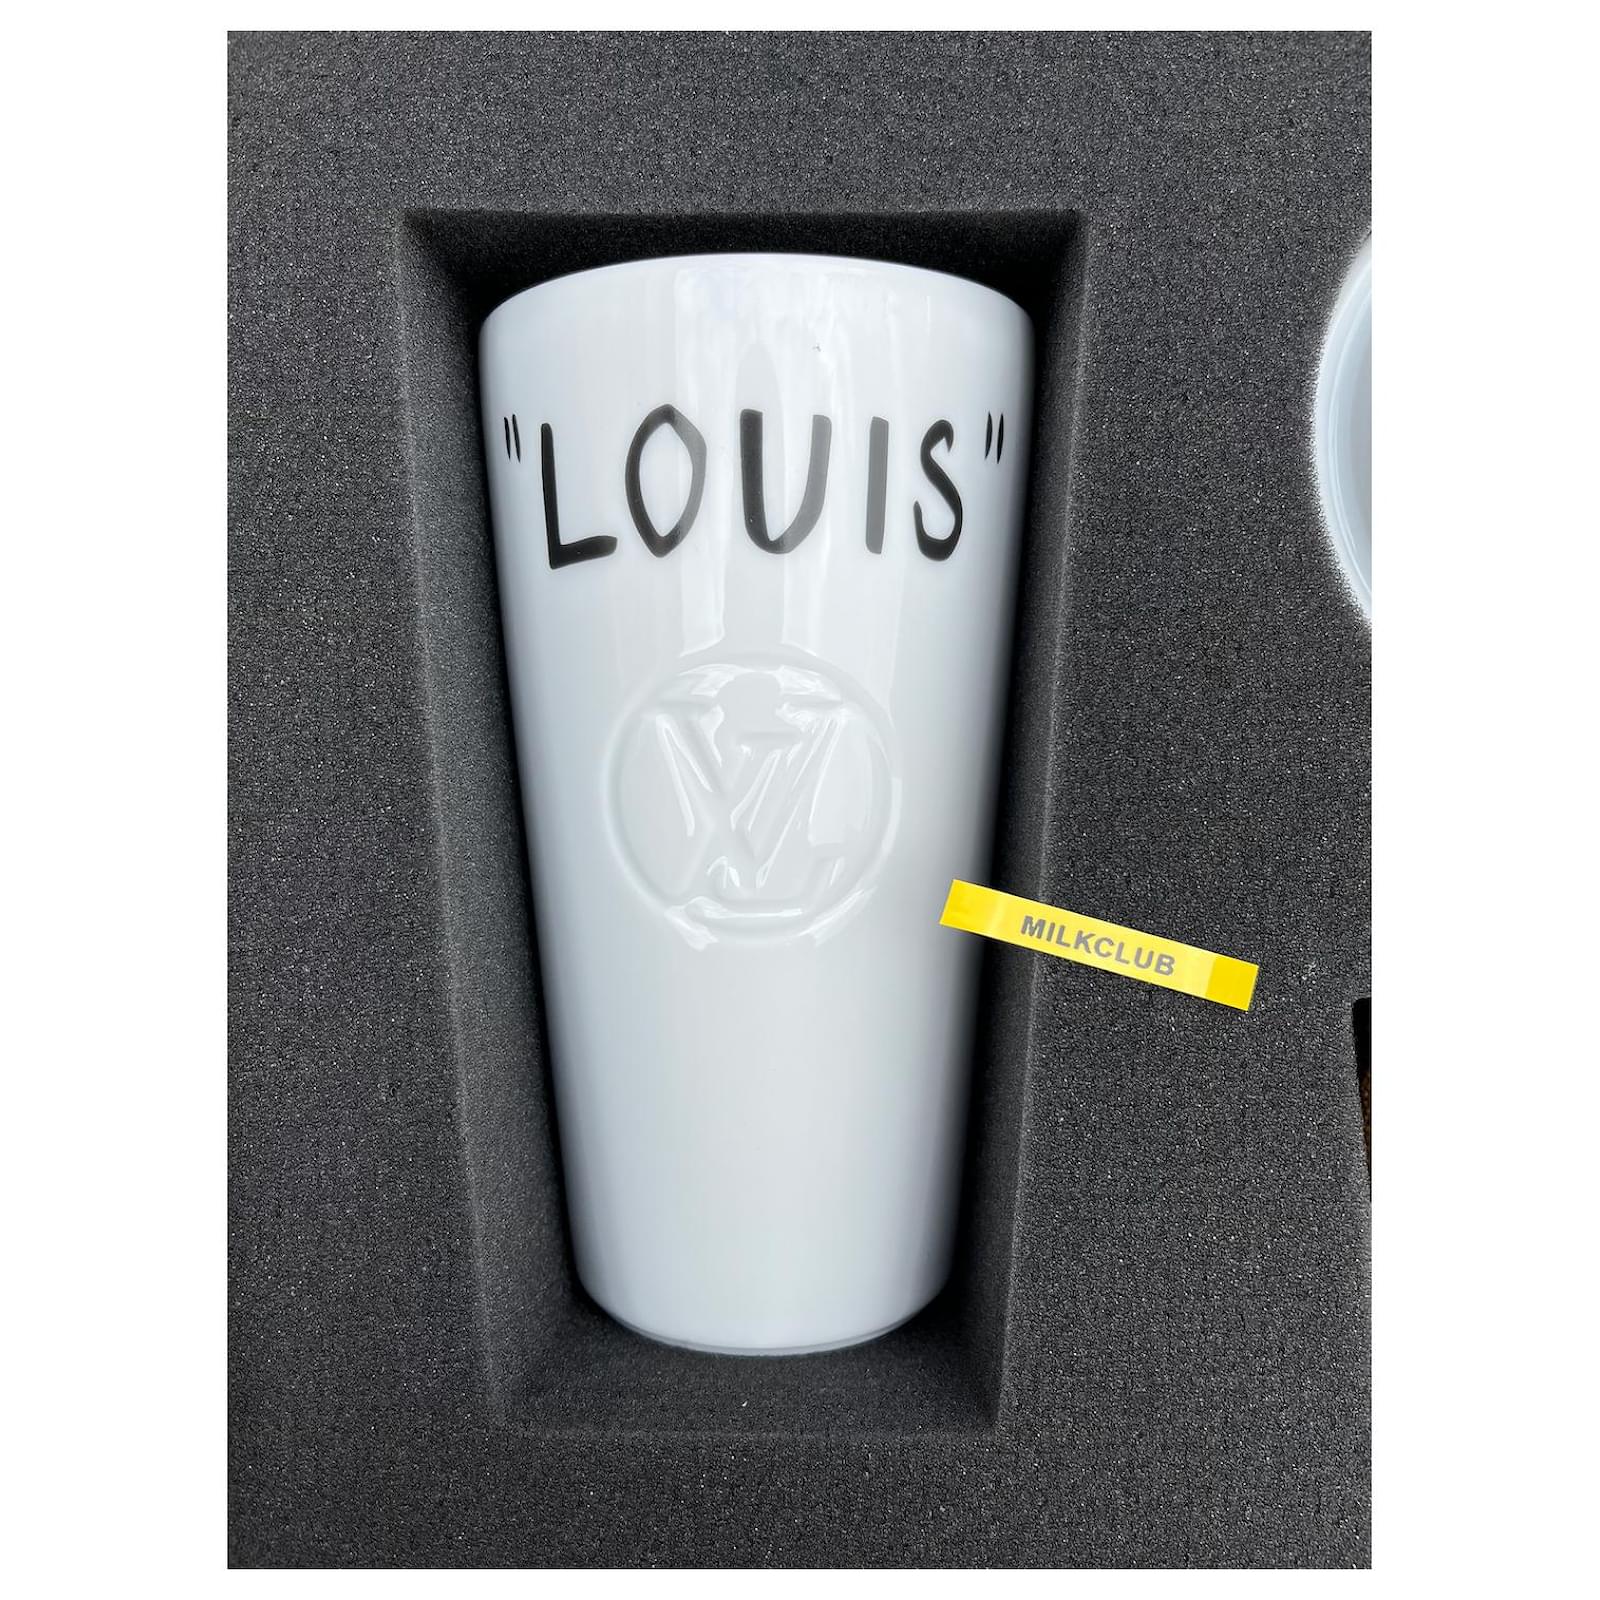 UNUSED LOUIS VUITTON GI0653 interior mug Monogram Cup Louie With sleeve  tumbler